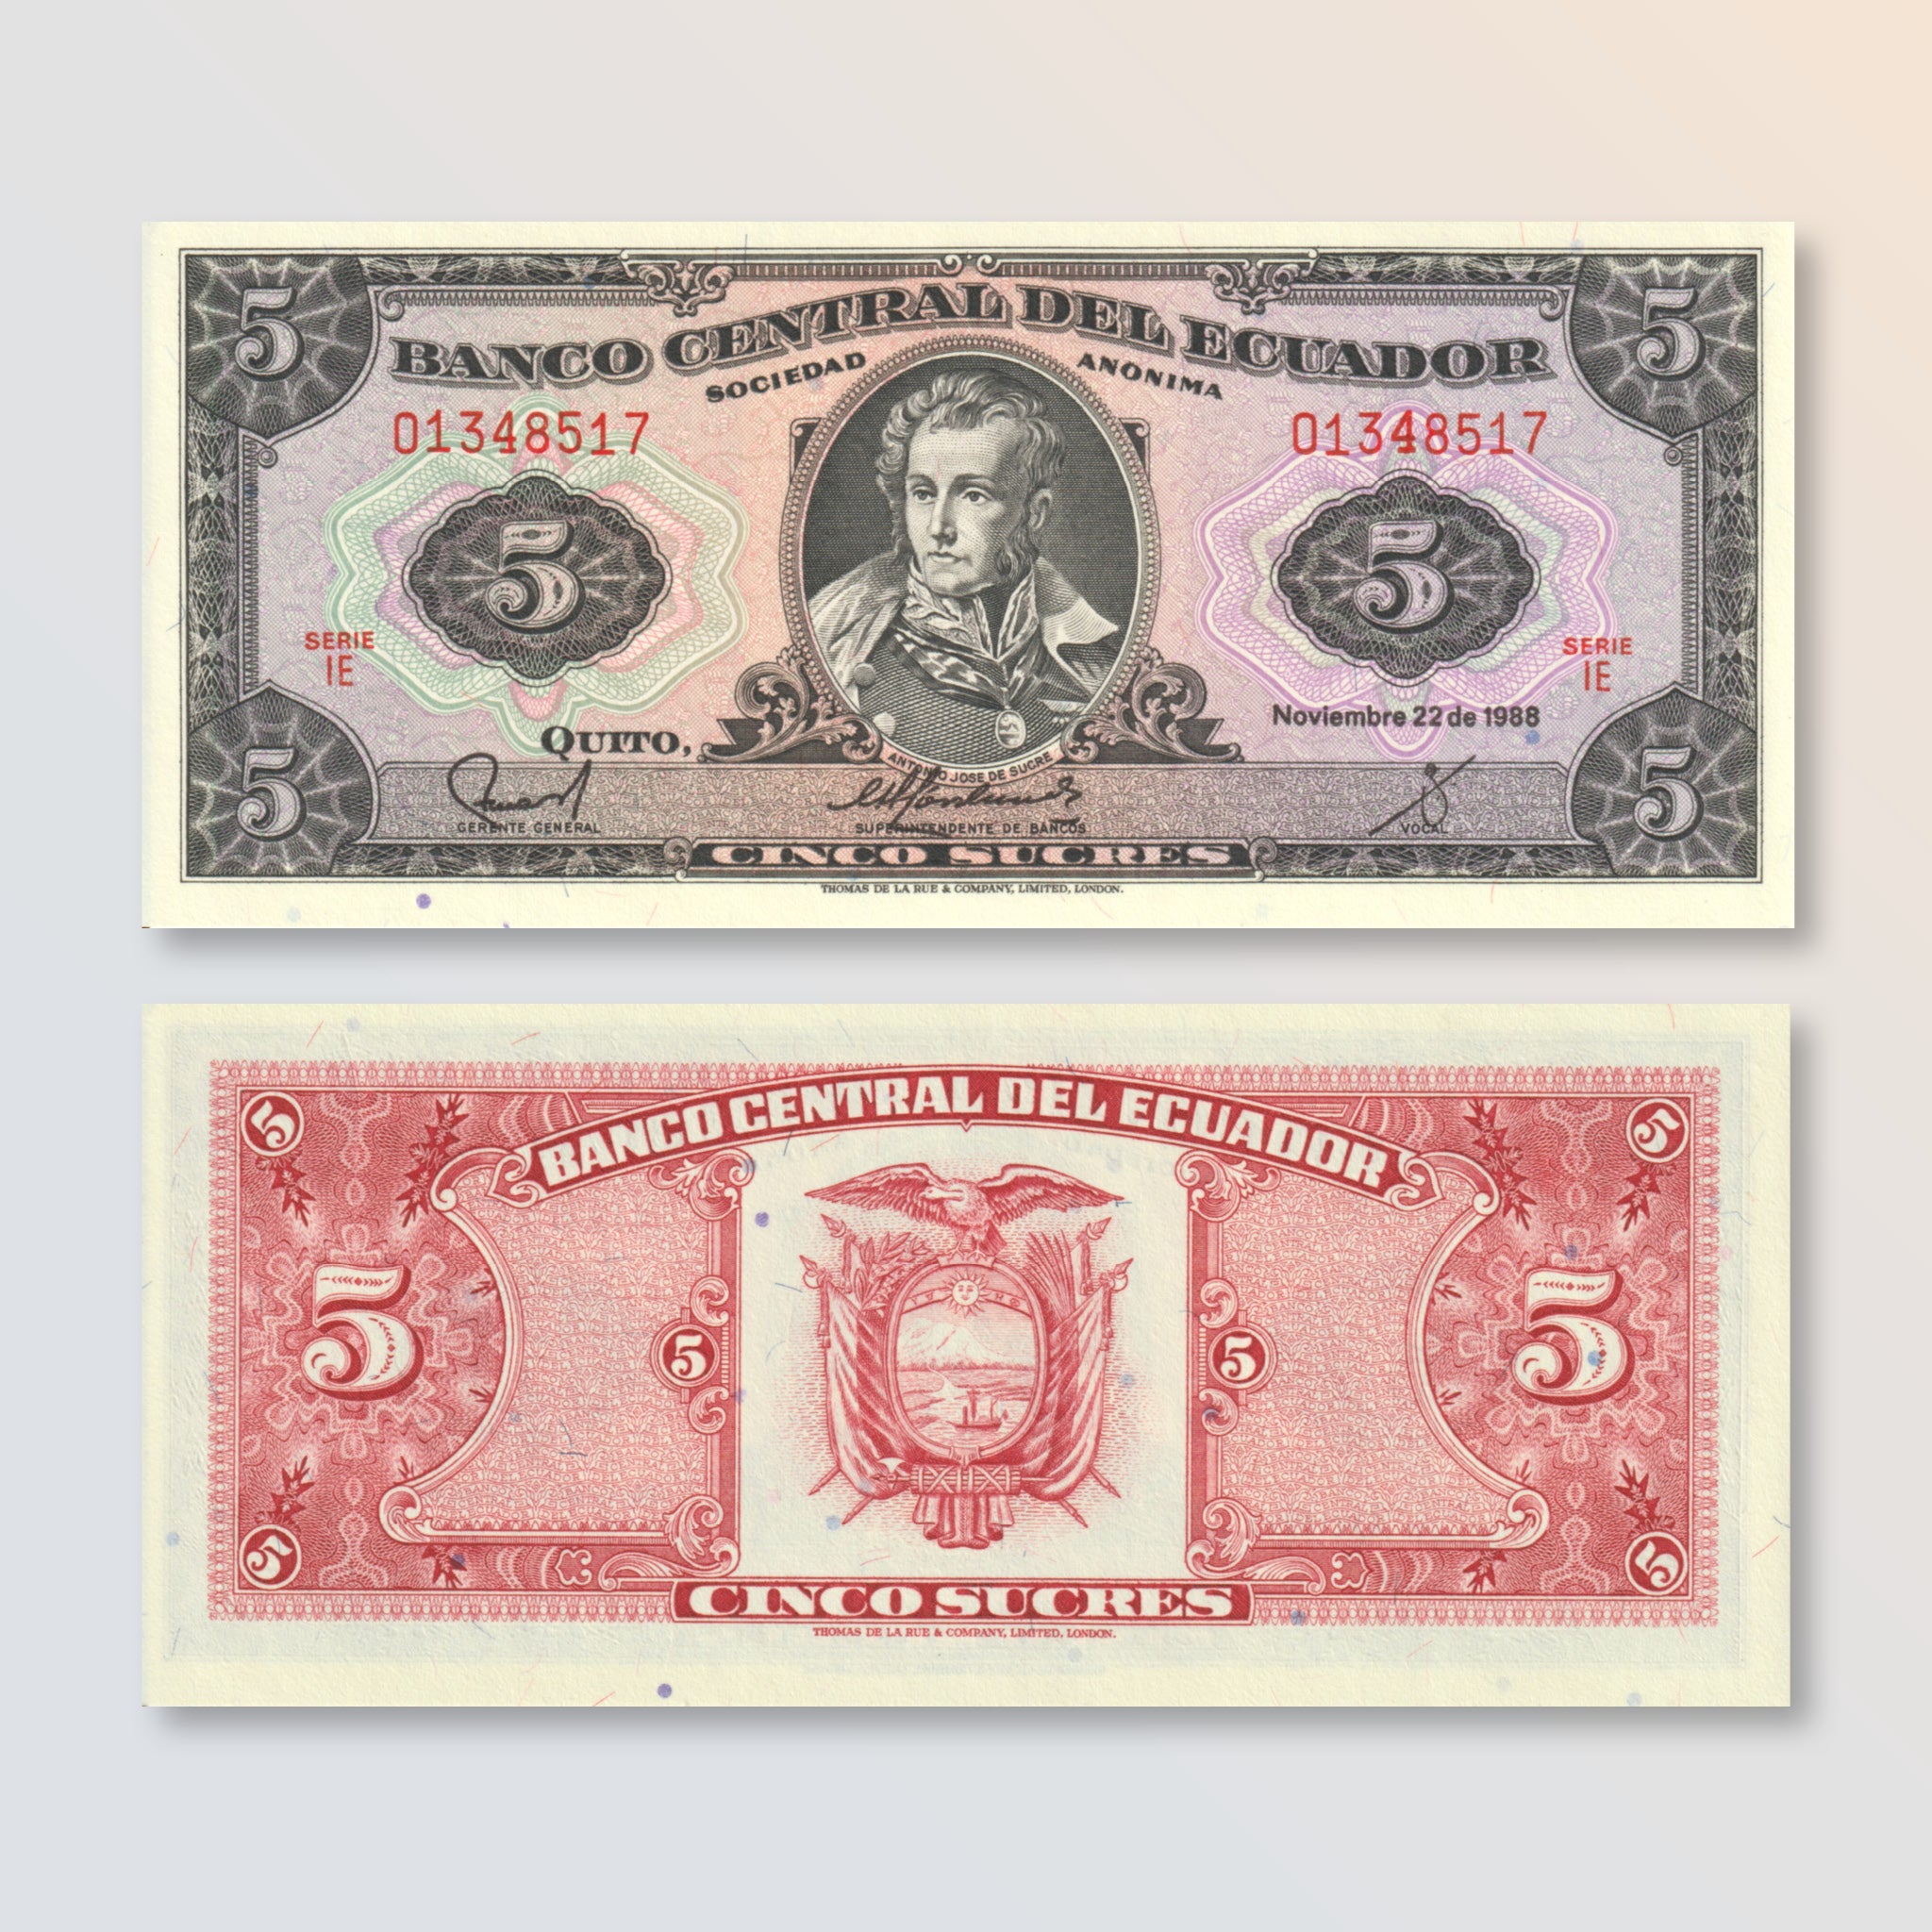 Ecuador 5 Sucres, 1988, , P113d, UNC - Robert's World Money - World Banknotes